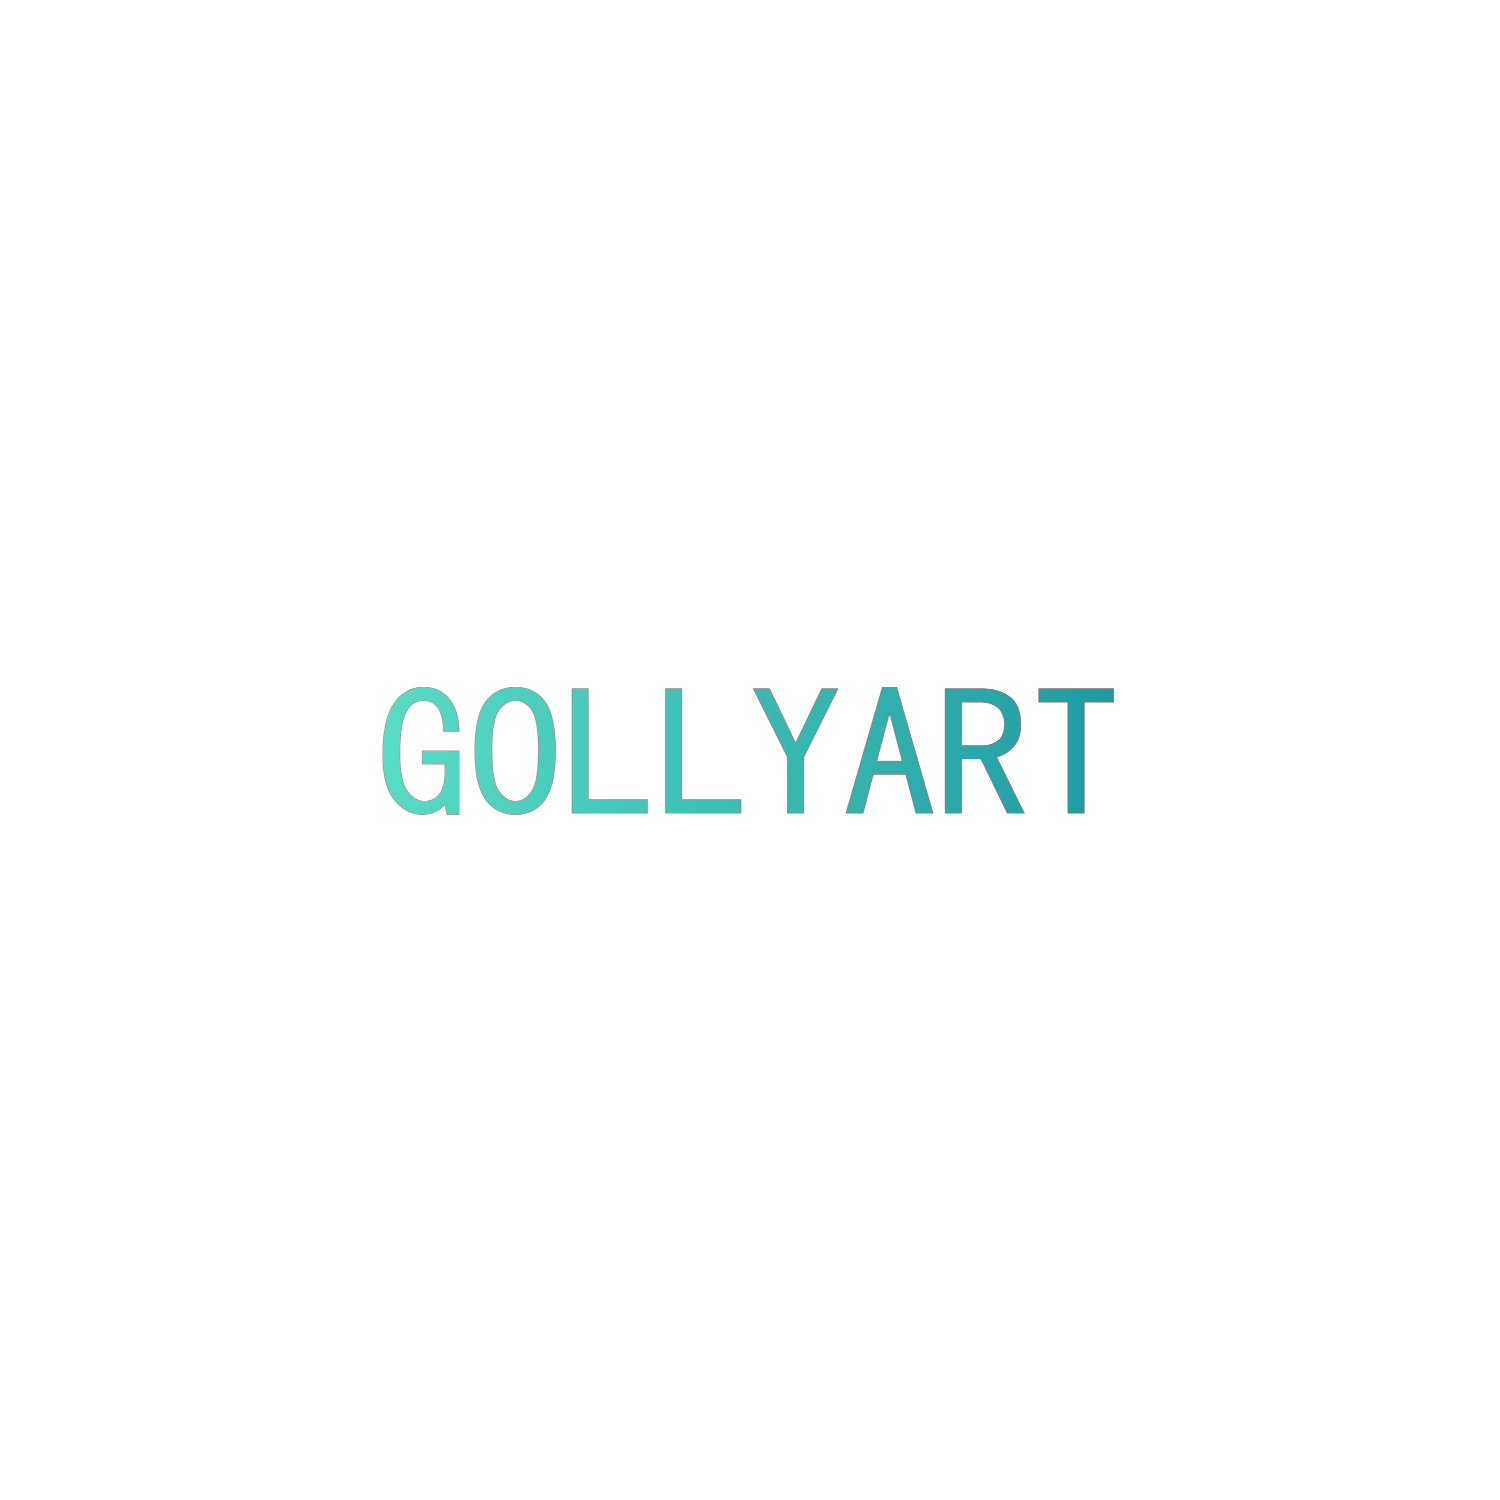 GOLLYART